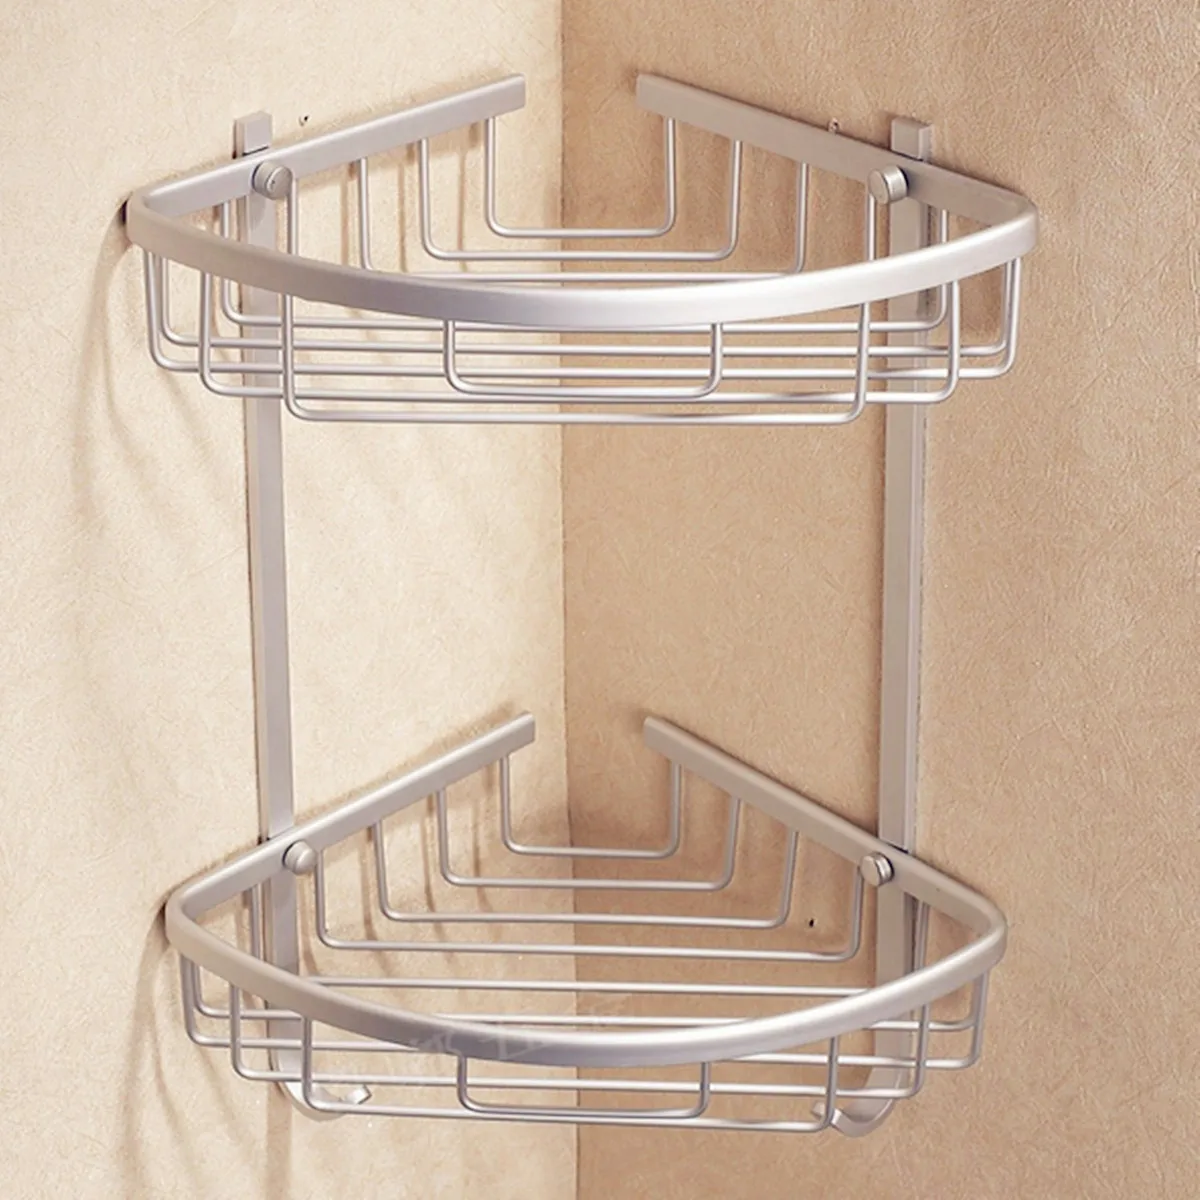 https://ae01.alicdn.com/kf/S8774b79fcd474aebbd650c970d149b5bl/Bathroom-Shelves-Aluminum-Shower-Triangular-Rack-Storage-Corner-Shelf-For-Shampoo-Soap-Cosmetic-Basket-Holder-2.jpg